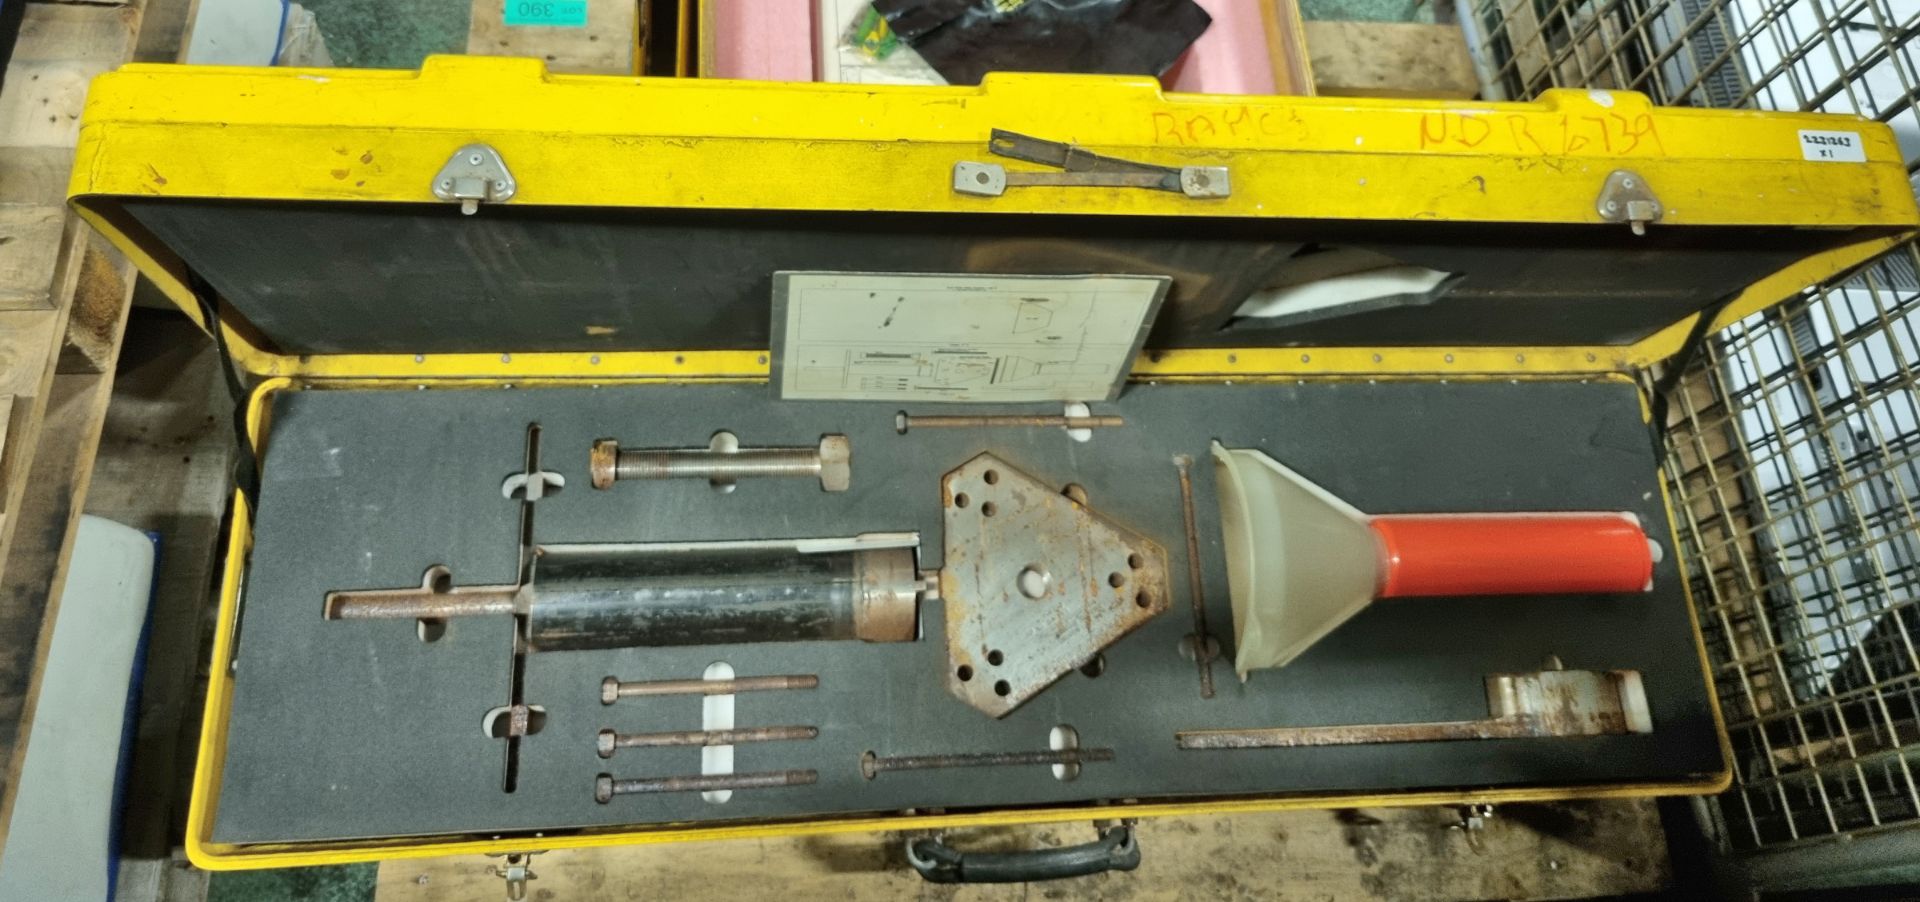 Fiberglass Tool box L66 x W40 x H33cm, Air pneumatic 70mm rotor lock nut drilling equipment & case - Image 7 of 9